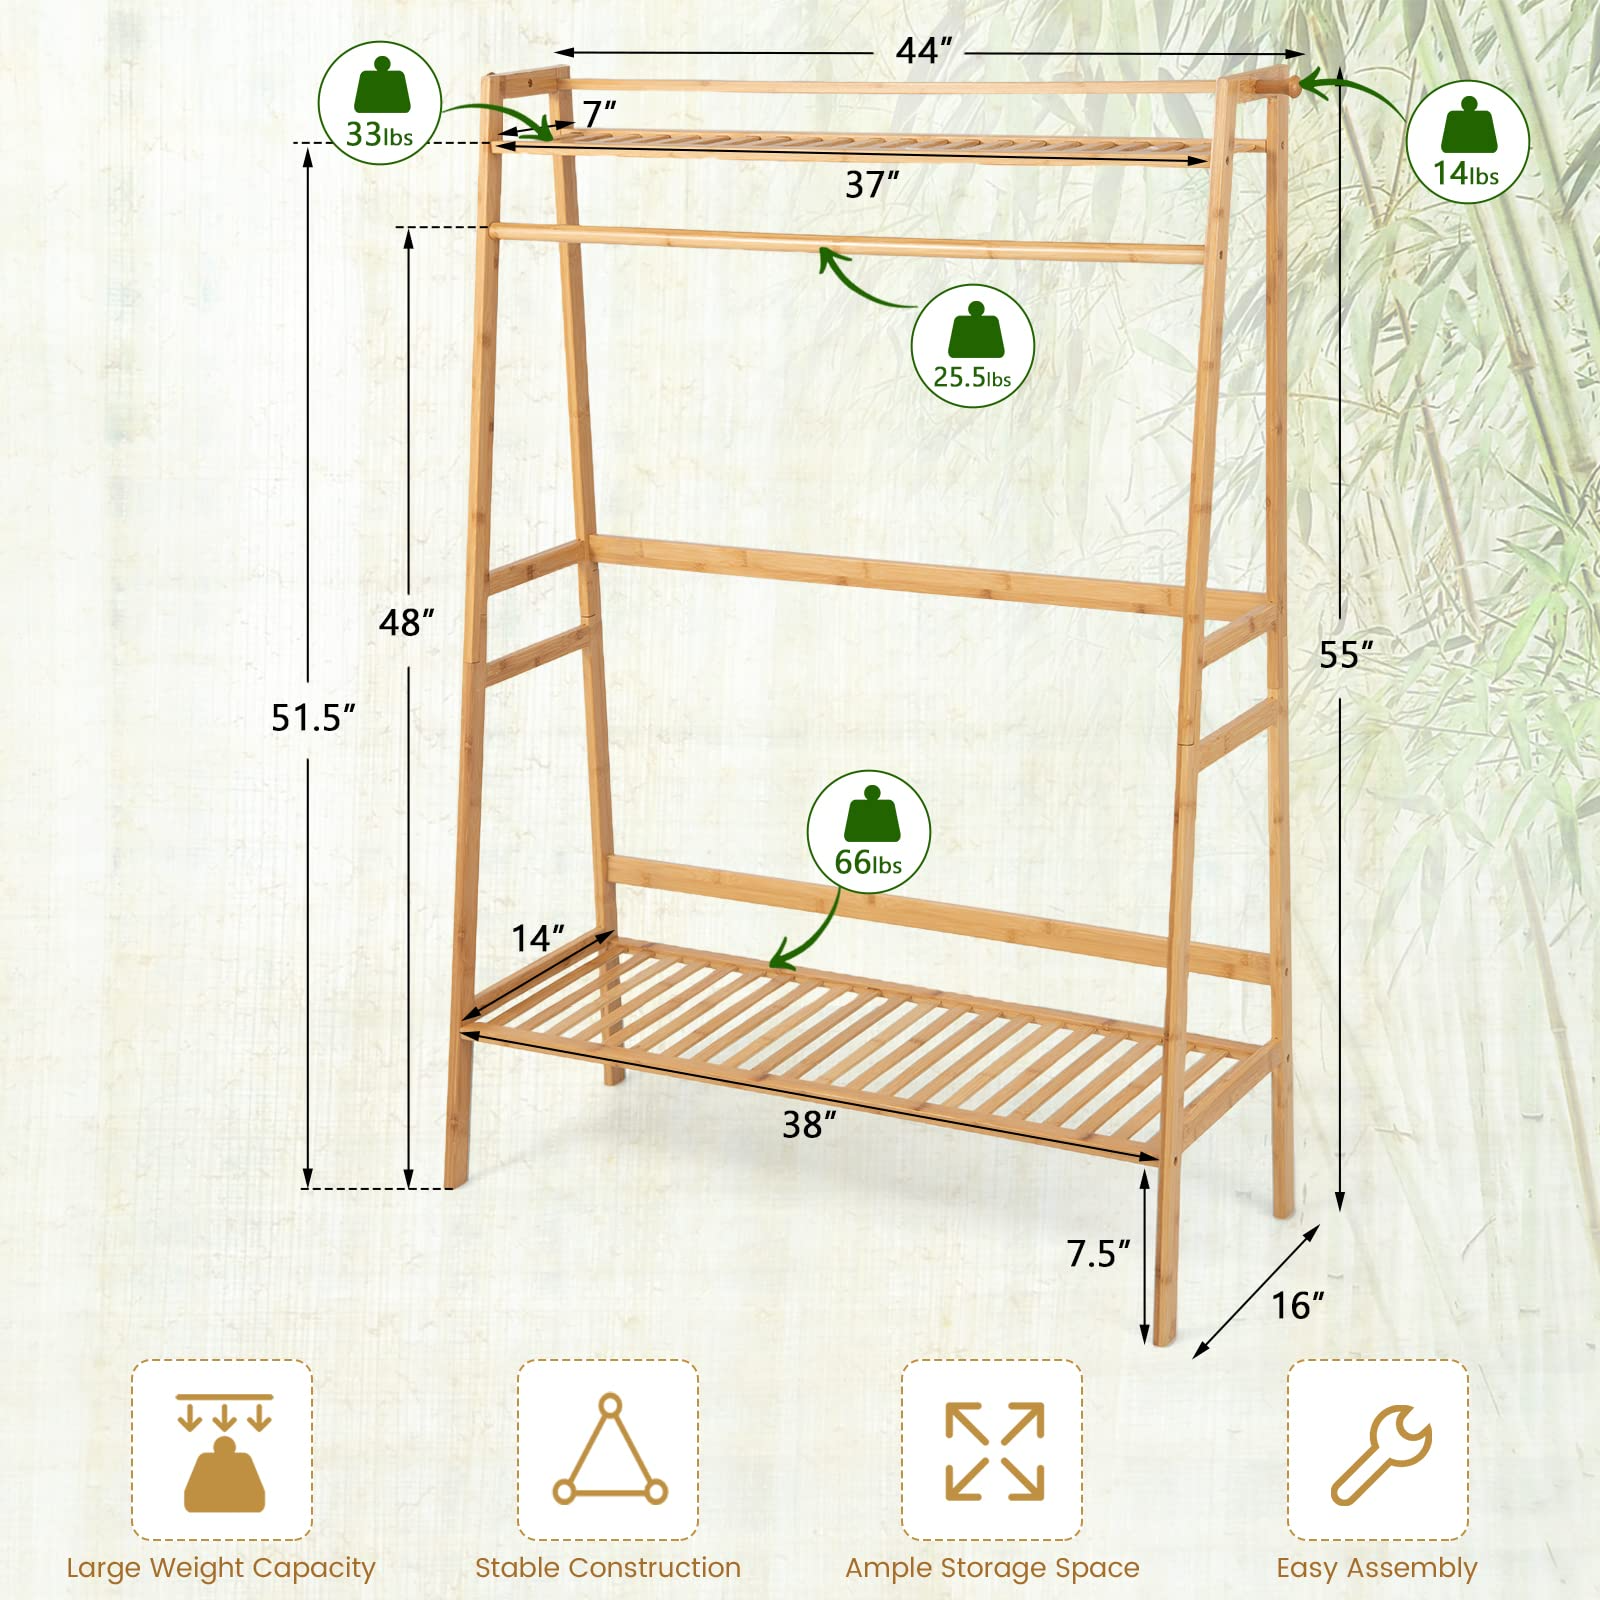 Tangkula Bamboo Clothing Rack with Storage Shelves